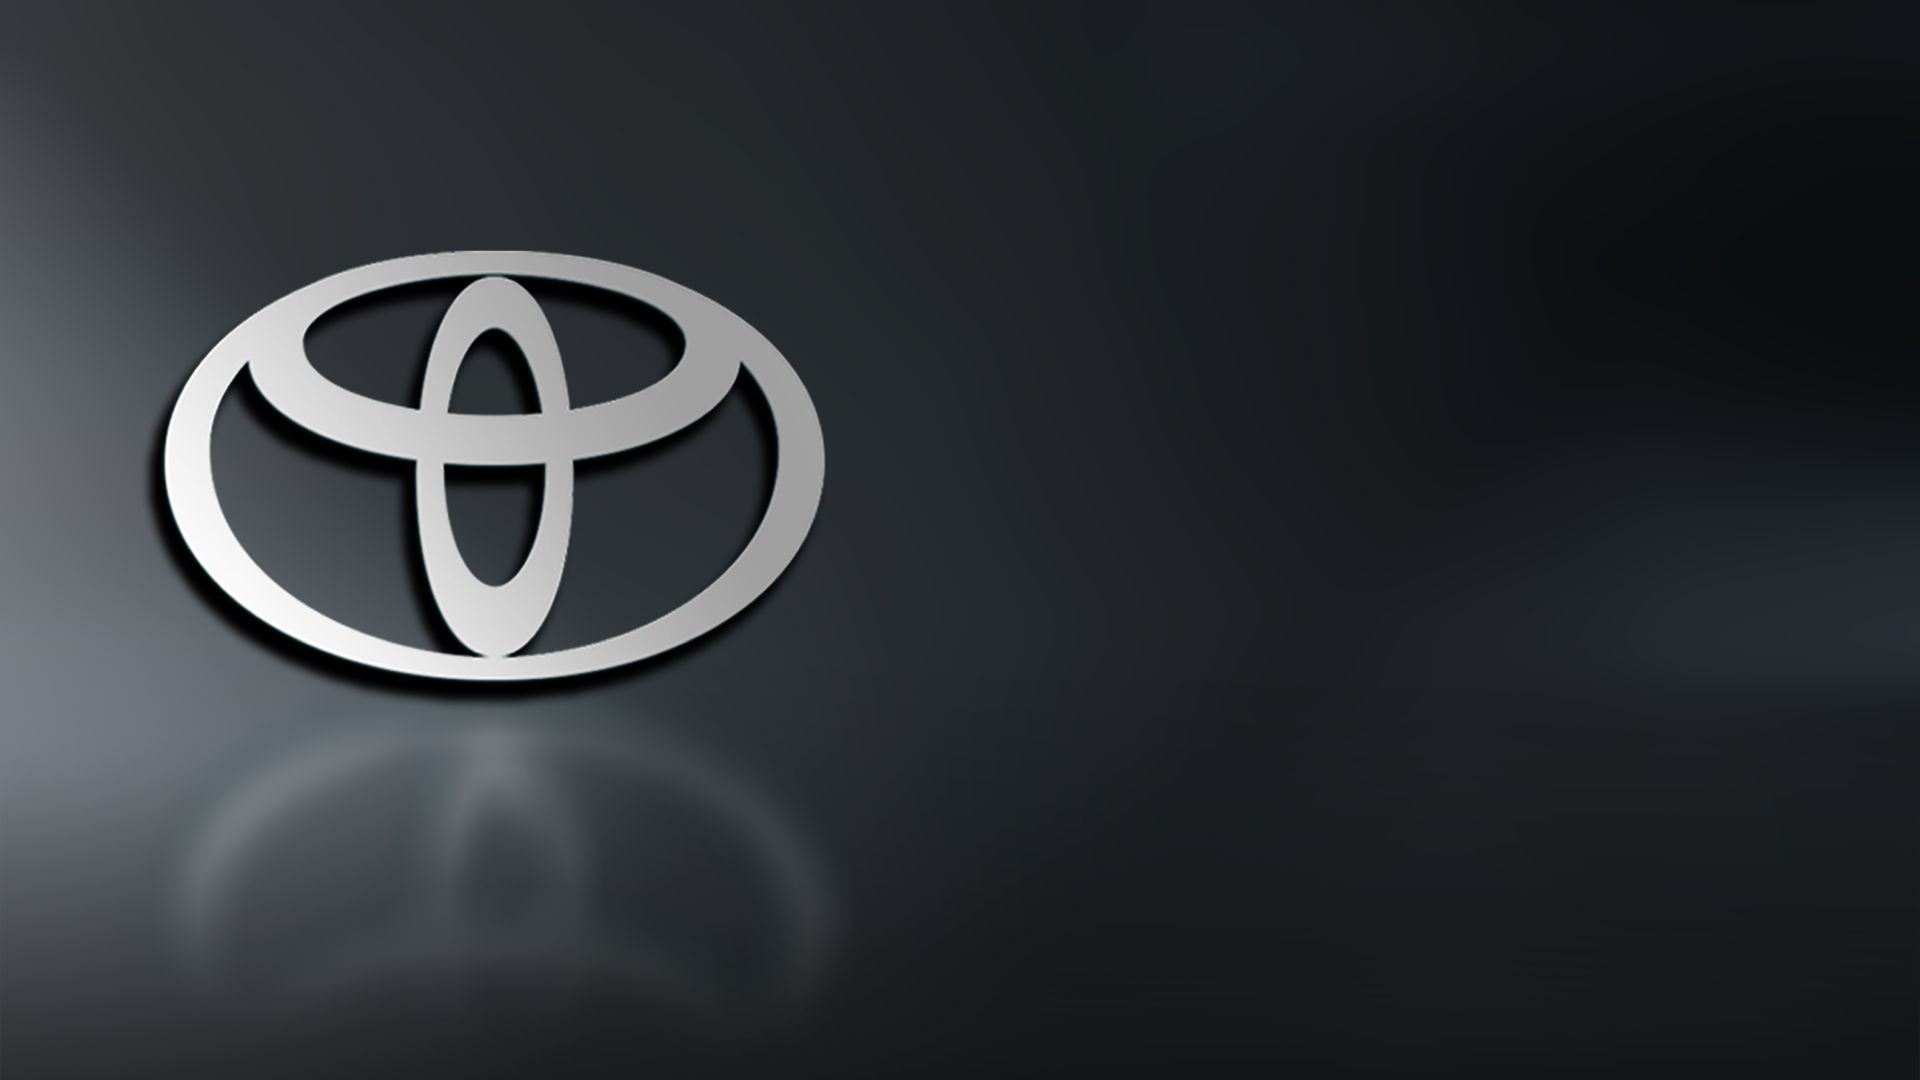 Логотип на заставку магнитолы. Toyota логотип 2021. Фирменные знаки Тойота. Логотип Тойота для автомагнитолы. Обои Тойота.